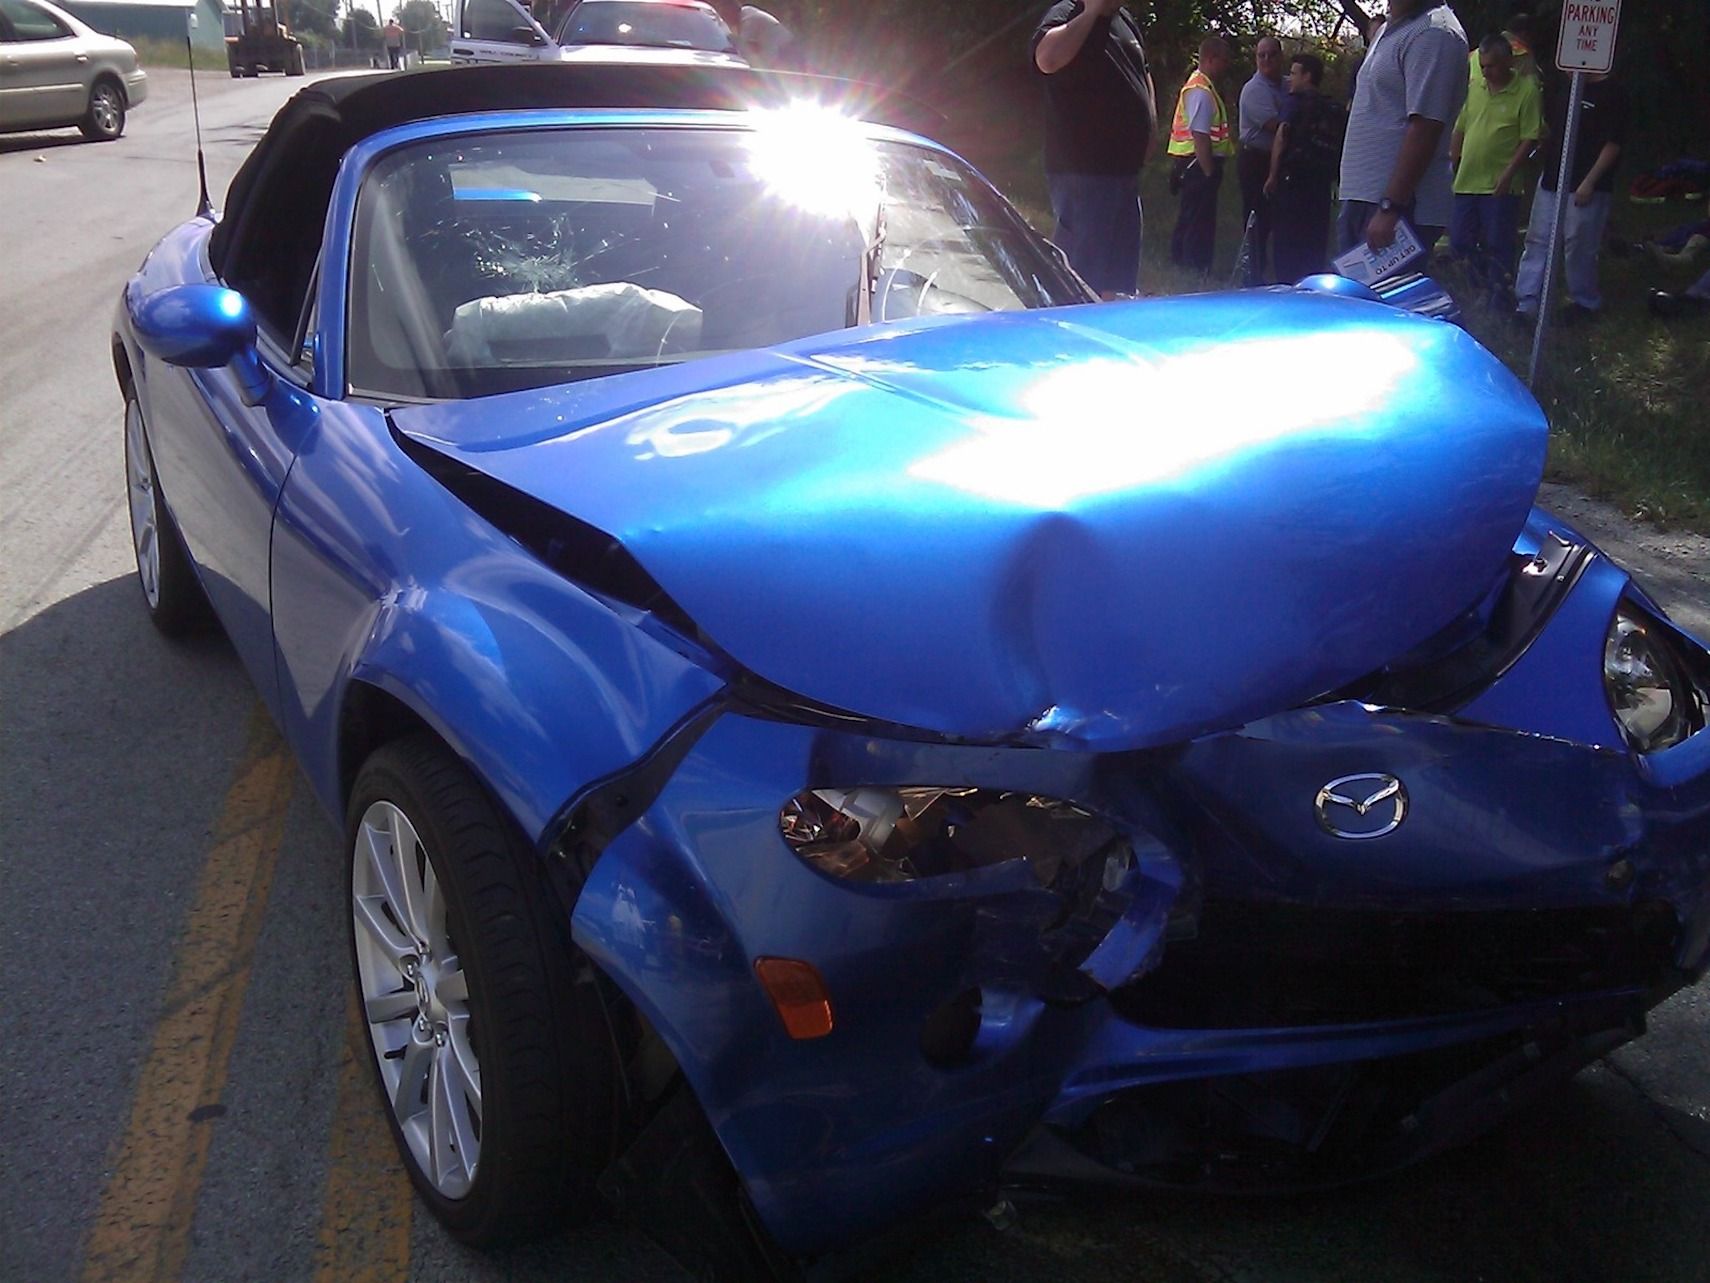 Mazda sports car accident